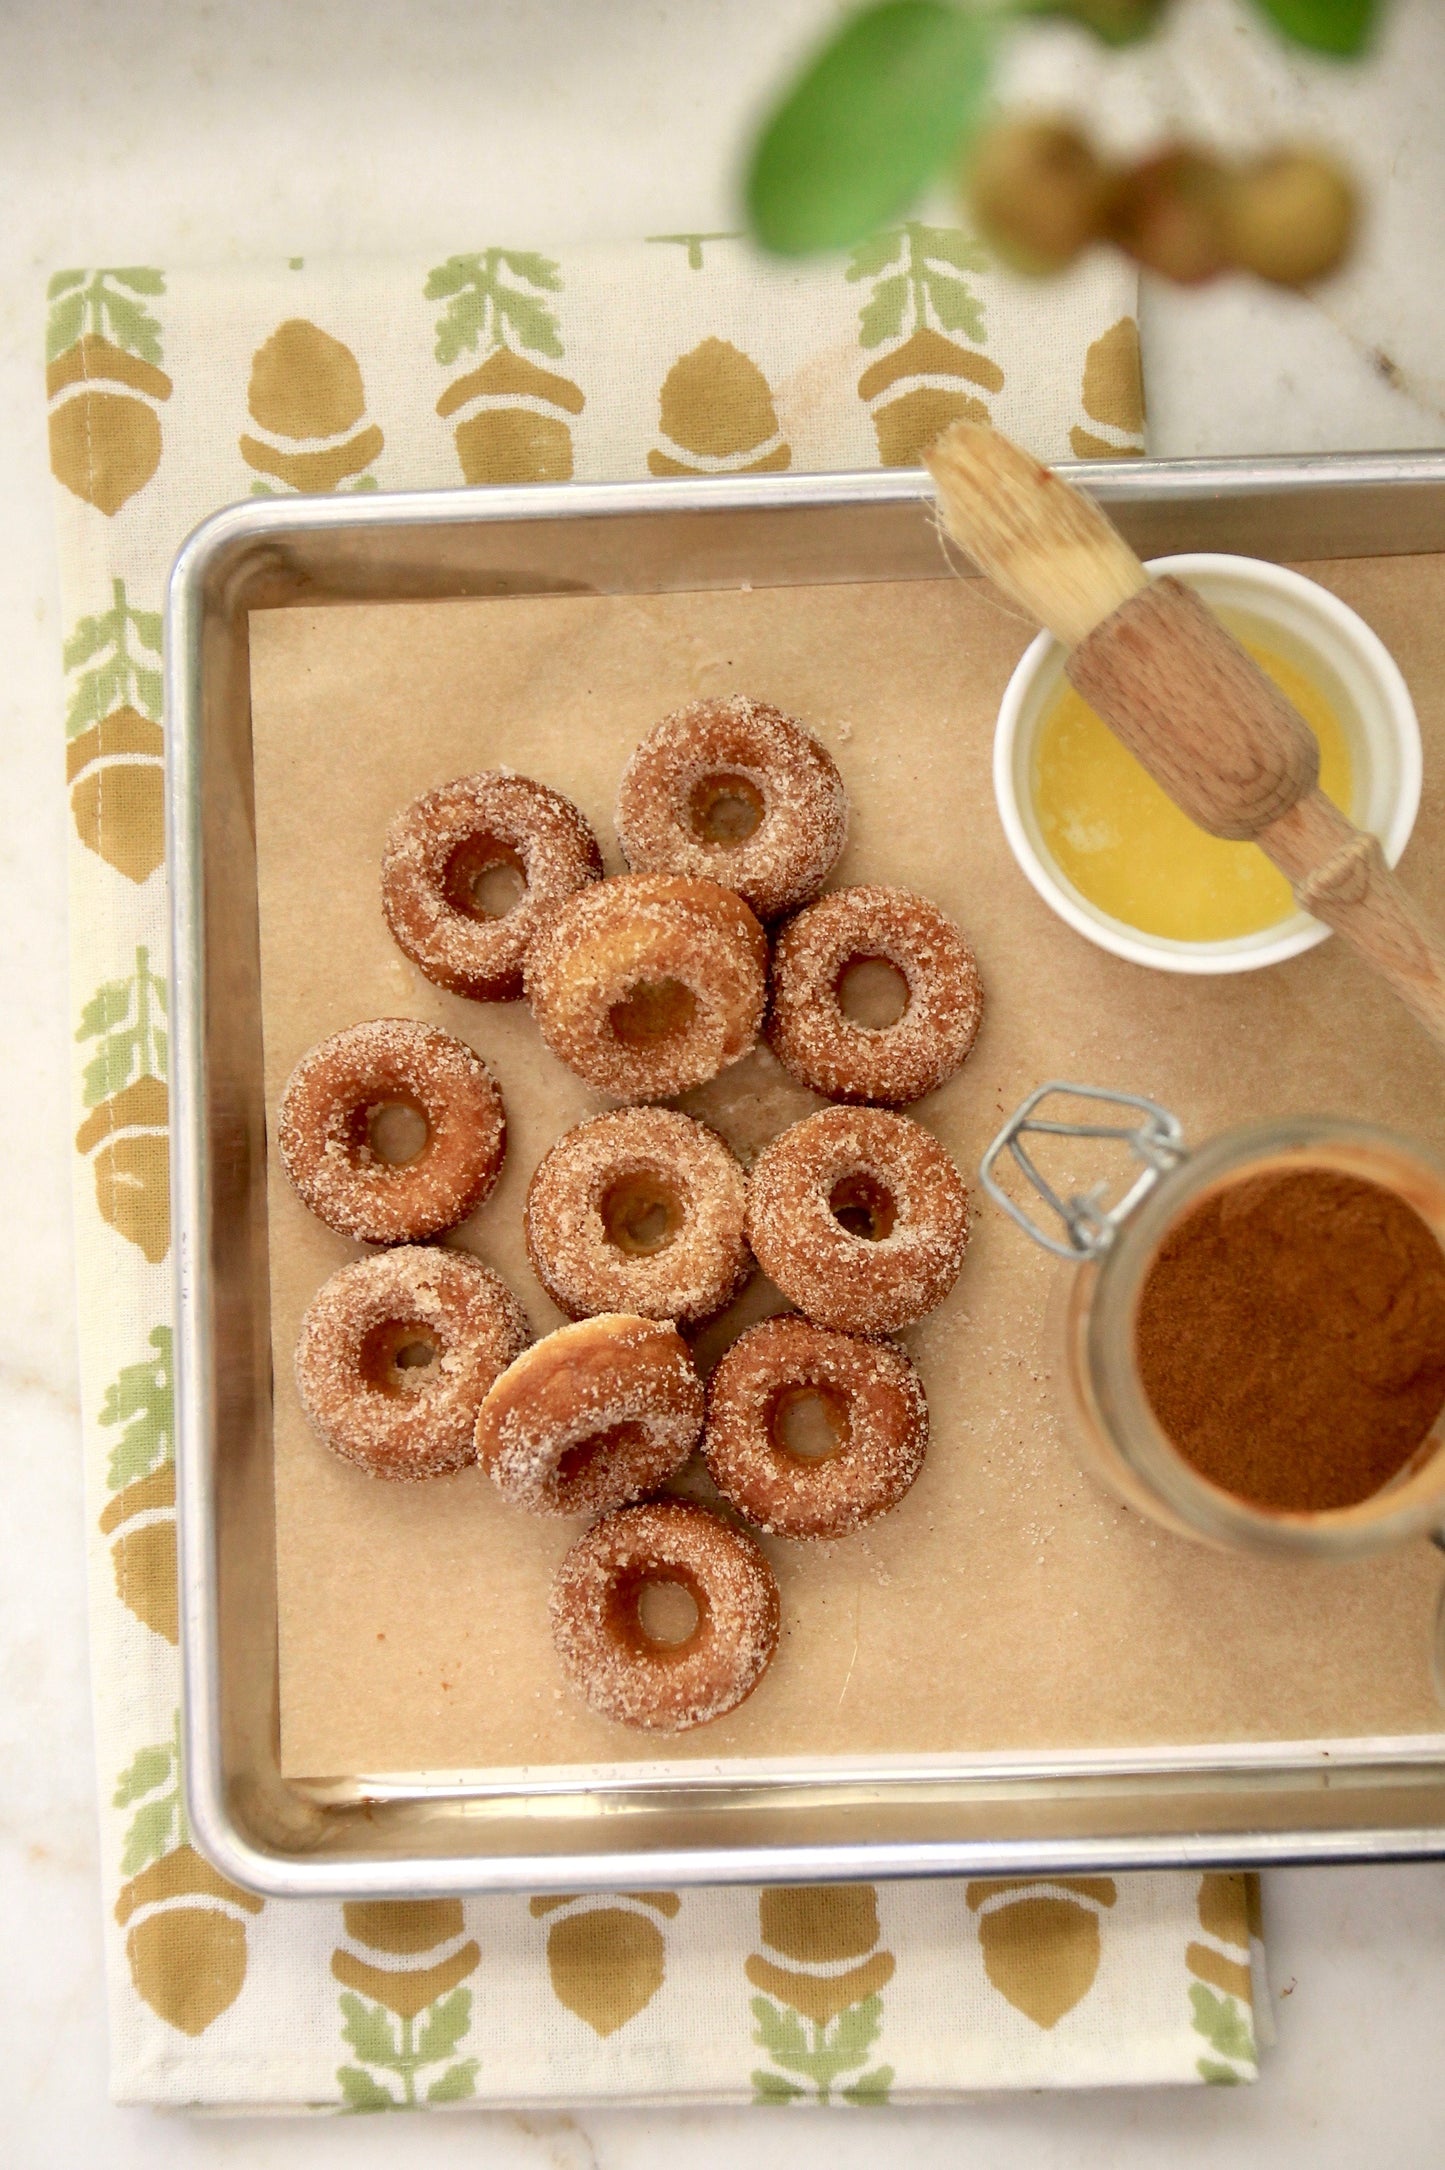 Donut Pan - Baked Donuts